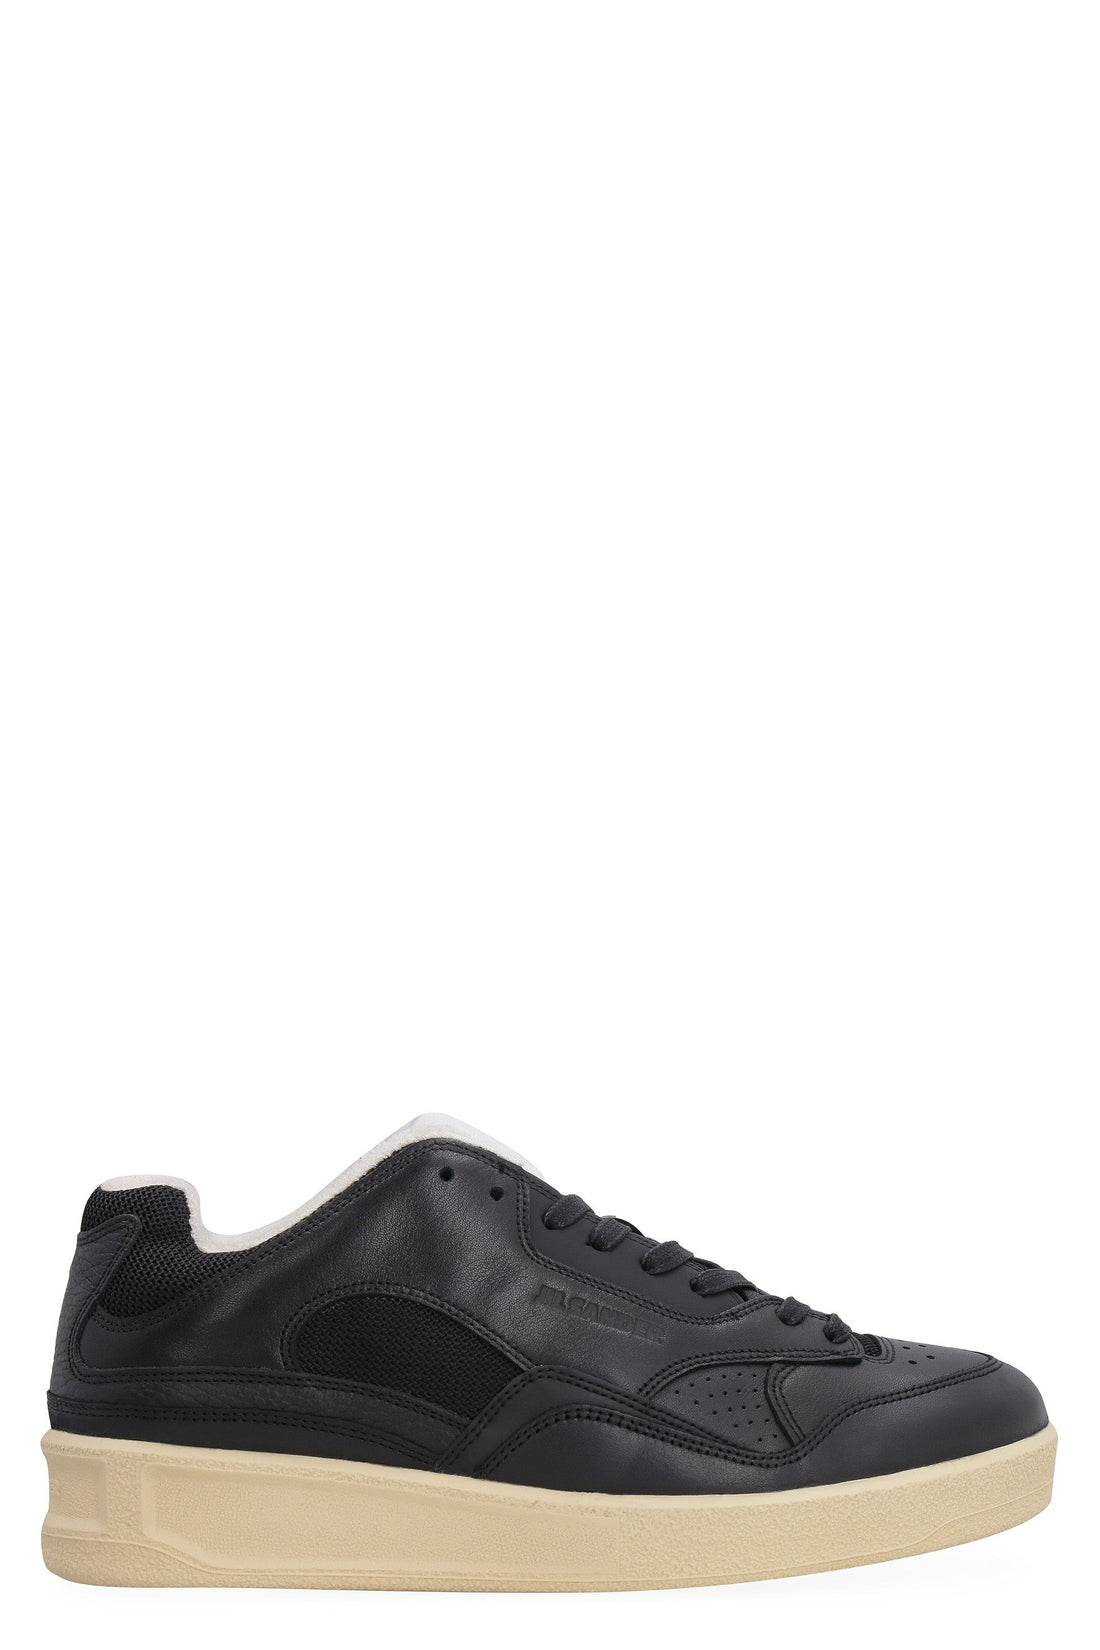 Jil Sander-OUTLET-SALE-Leather low-top sneakers-ARCHIVIST